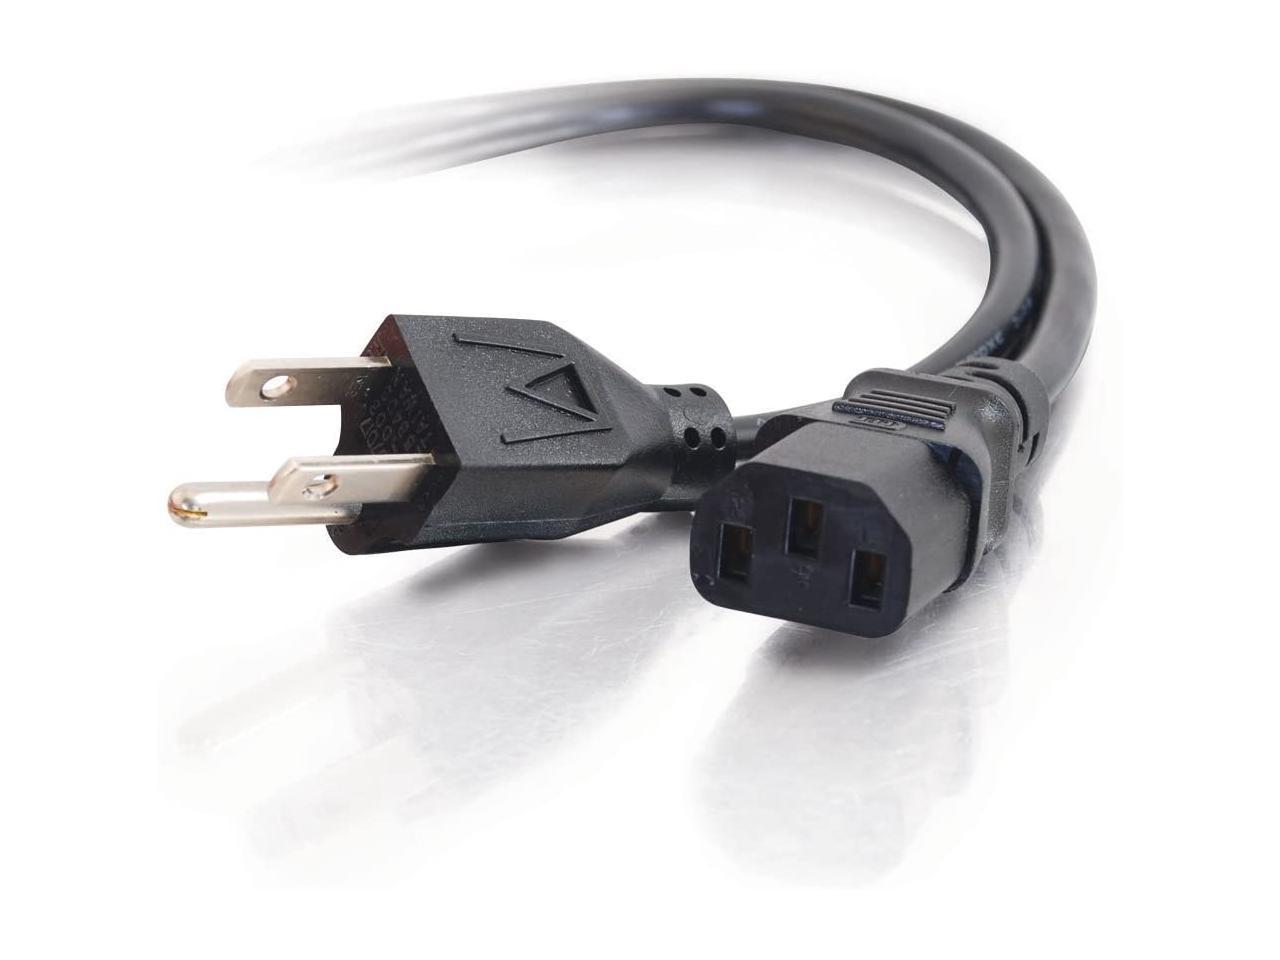 SoDo Tek TM 6 FT 3 Prong AC Power Cord Cable Plug for LG 37CS560 TV